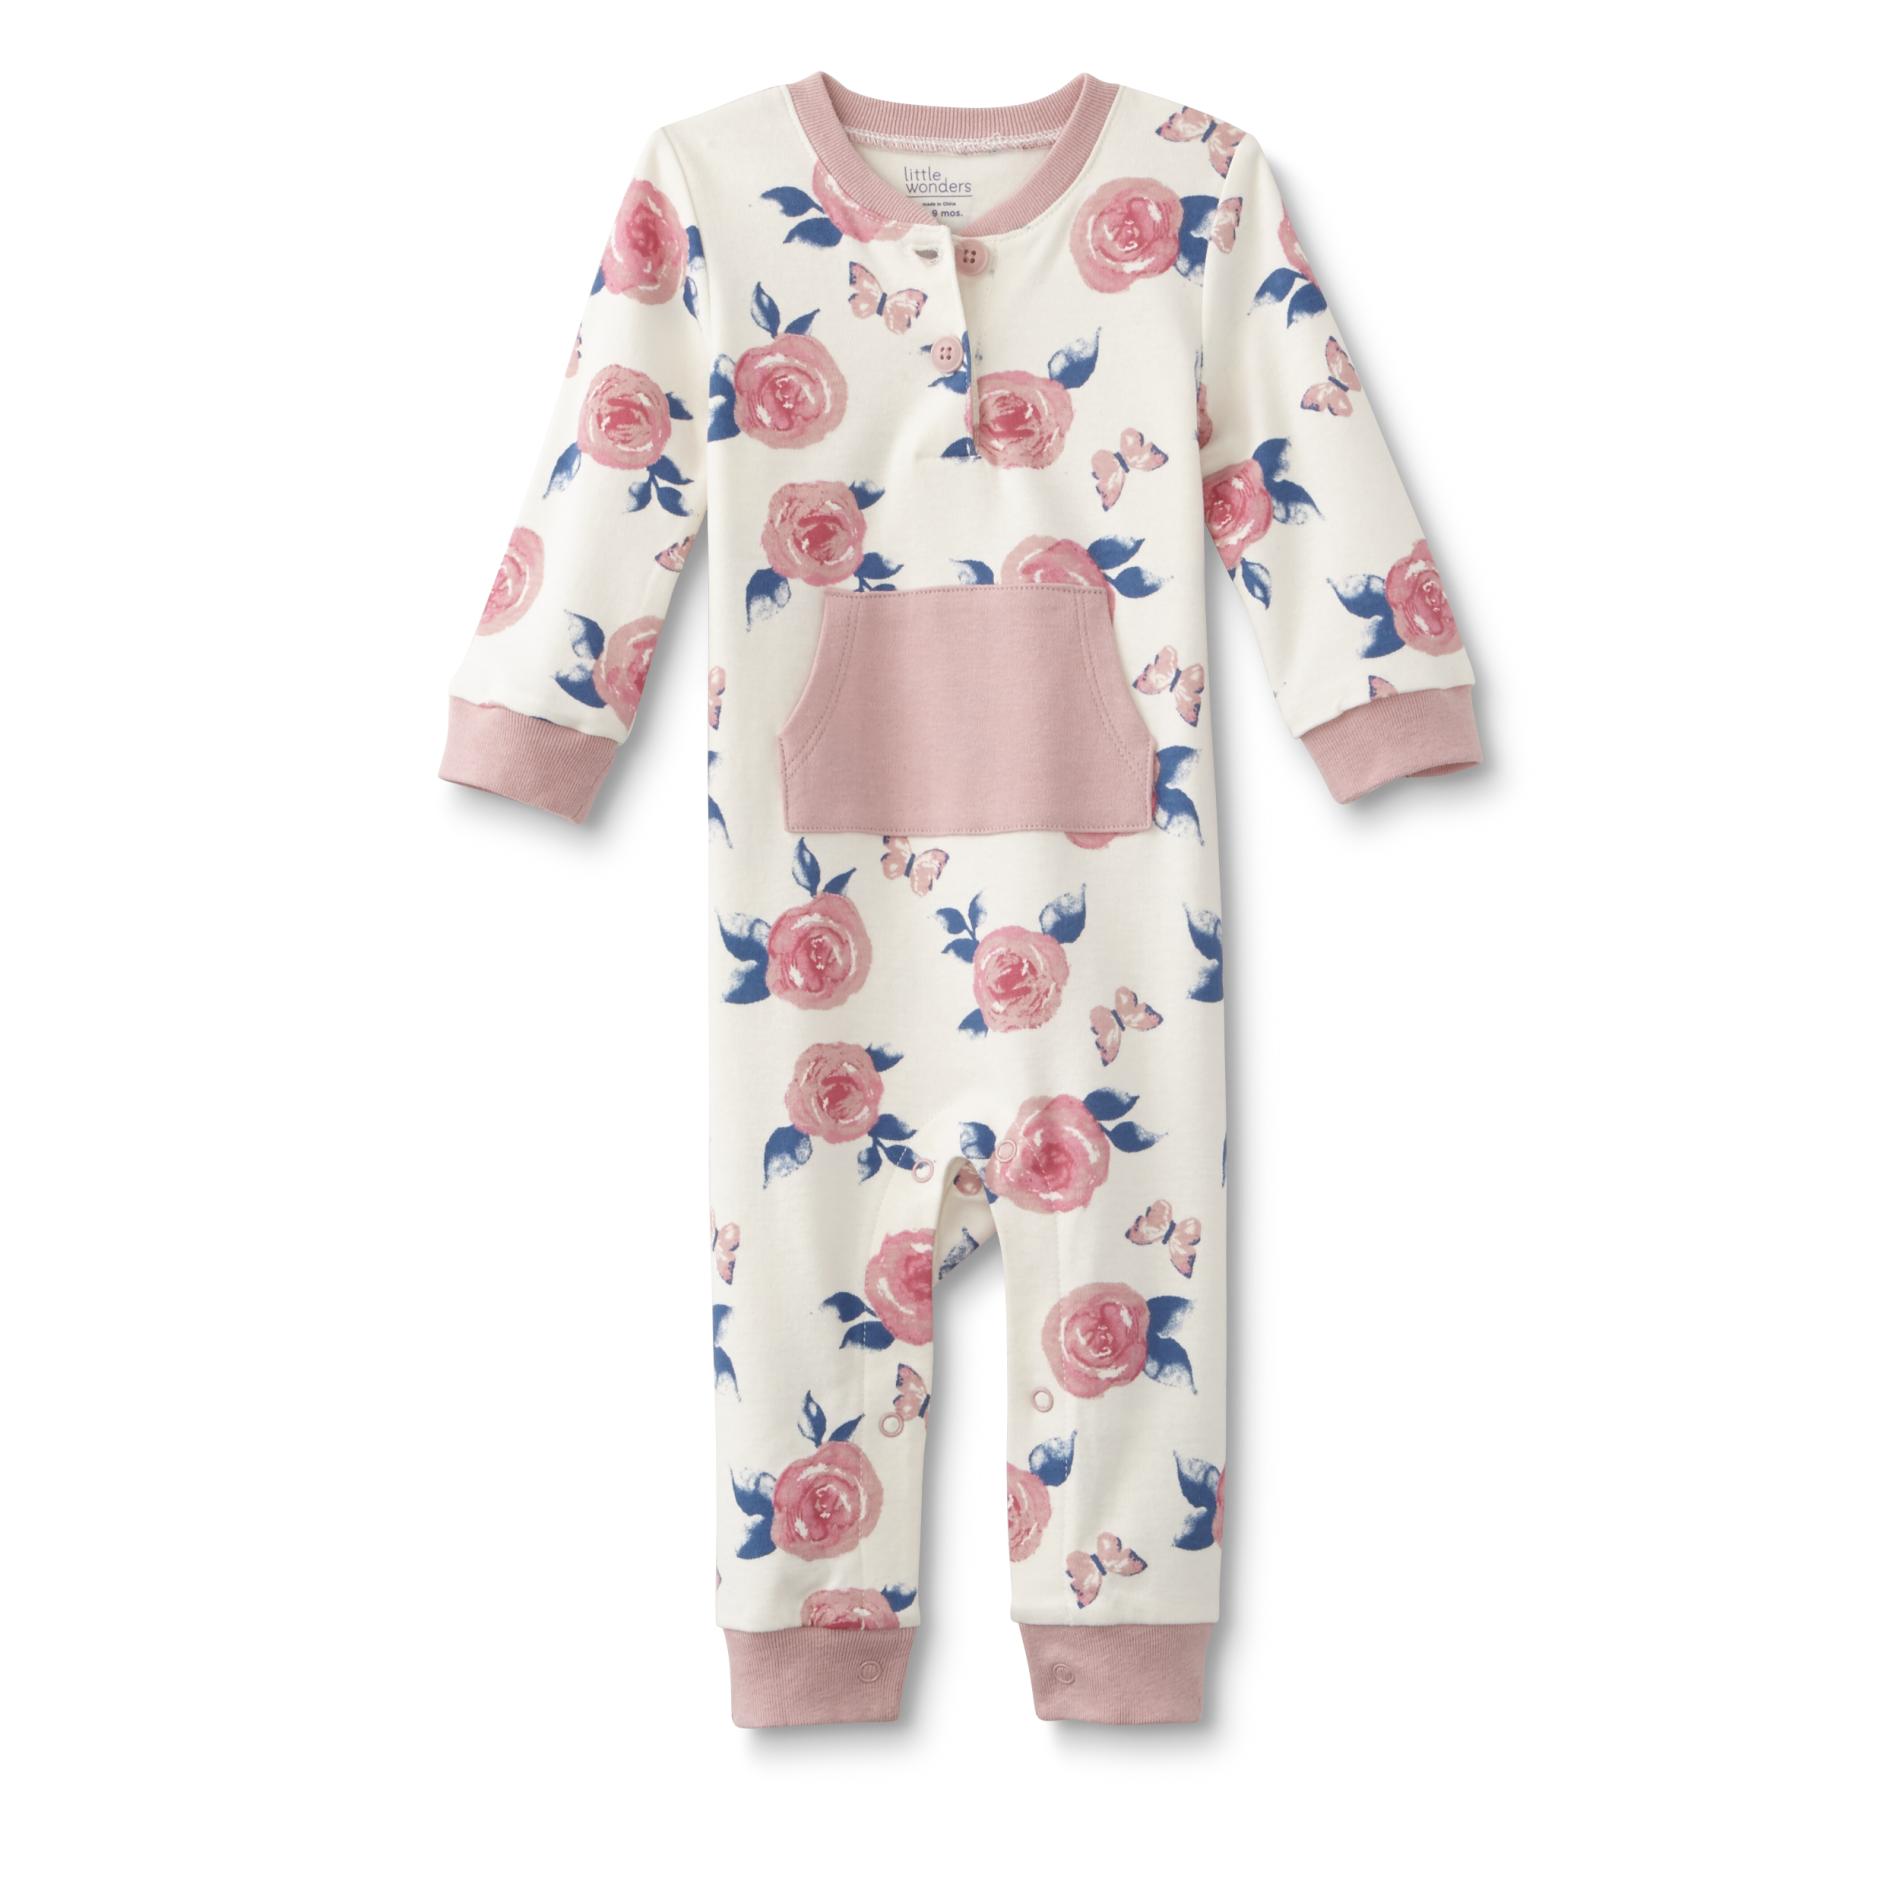 Little Wonders Newborn & Infant Girl's Sleeper - Floral & Butterfly